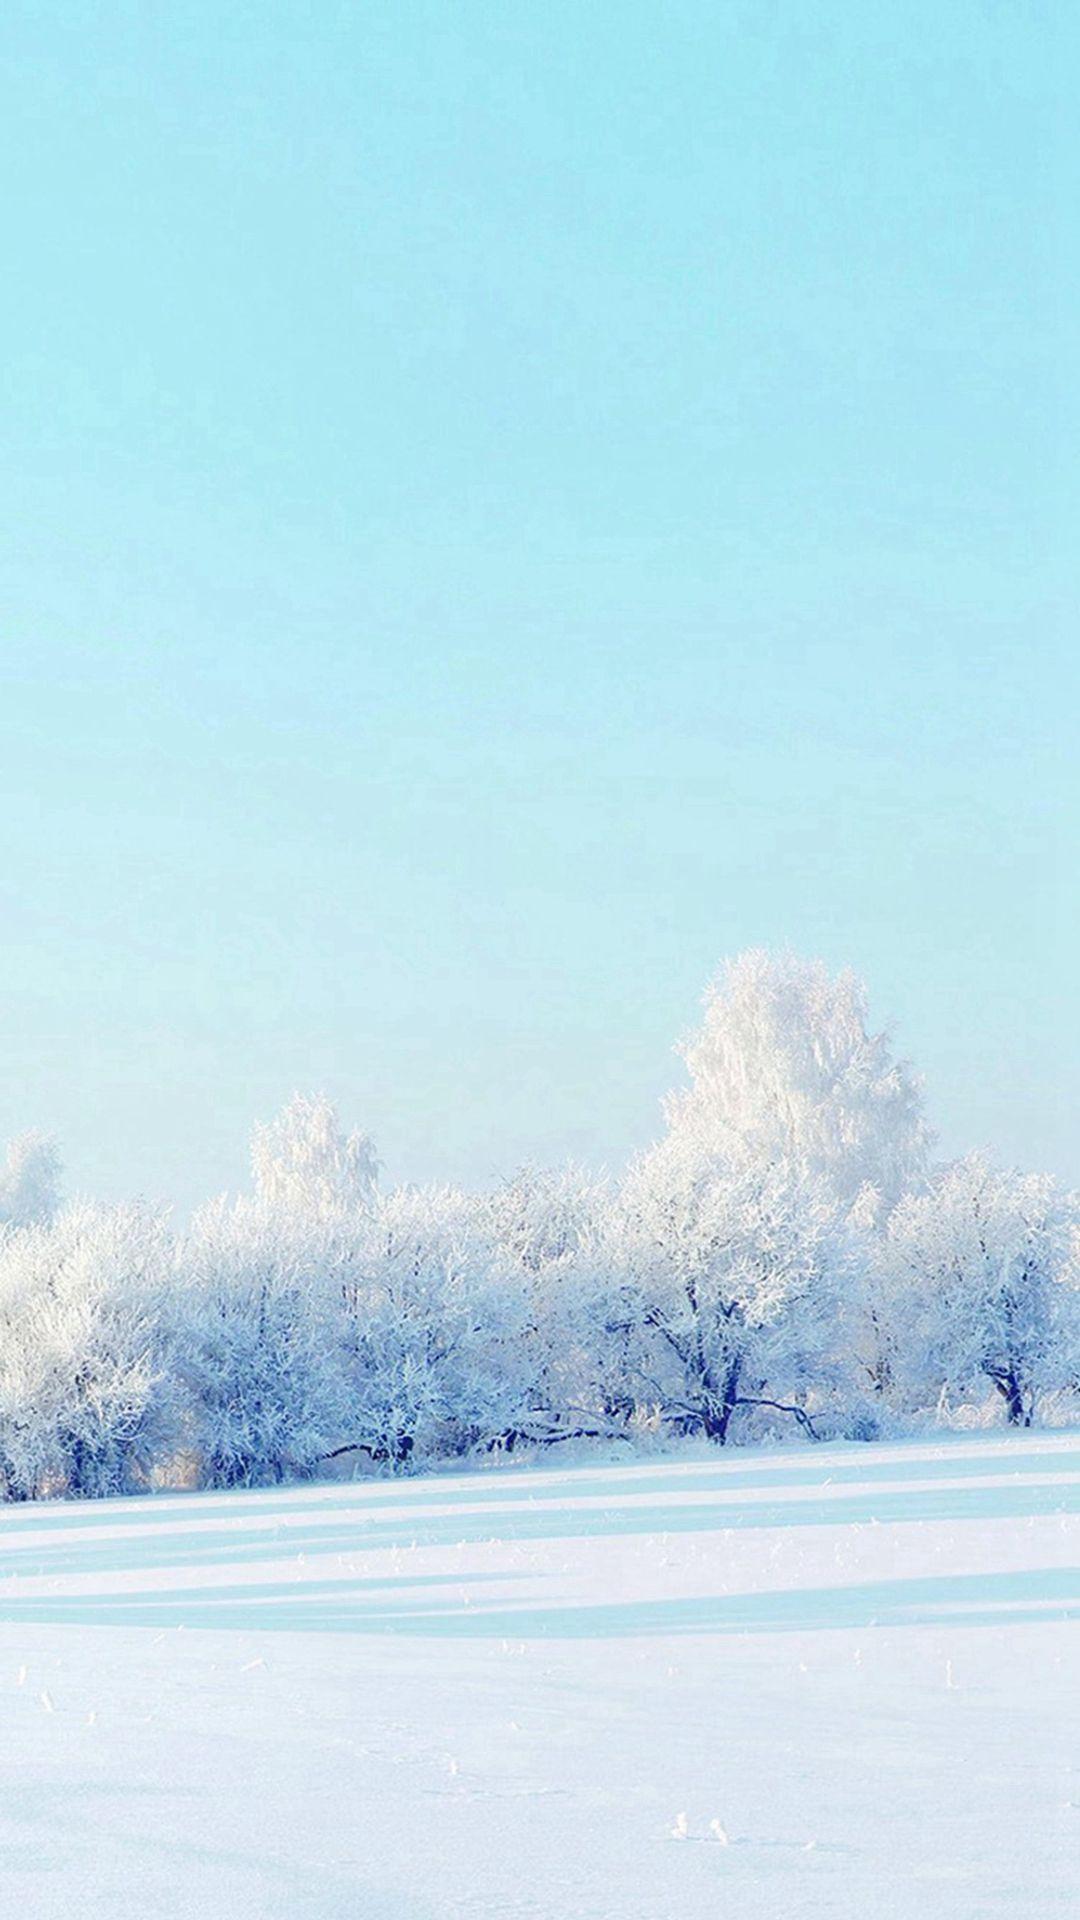 Best Winter iPhone 8 Wallpaper HD [2020]